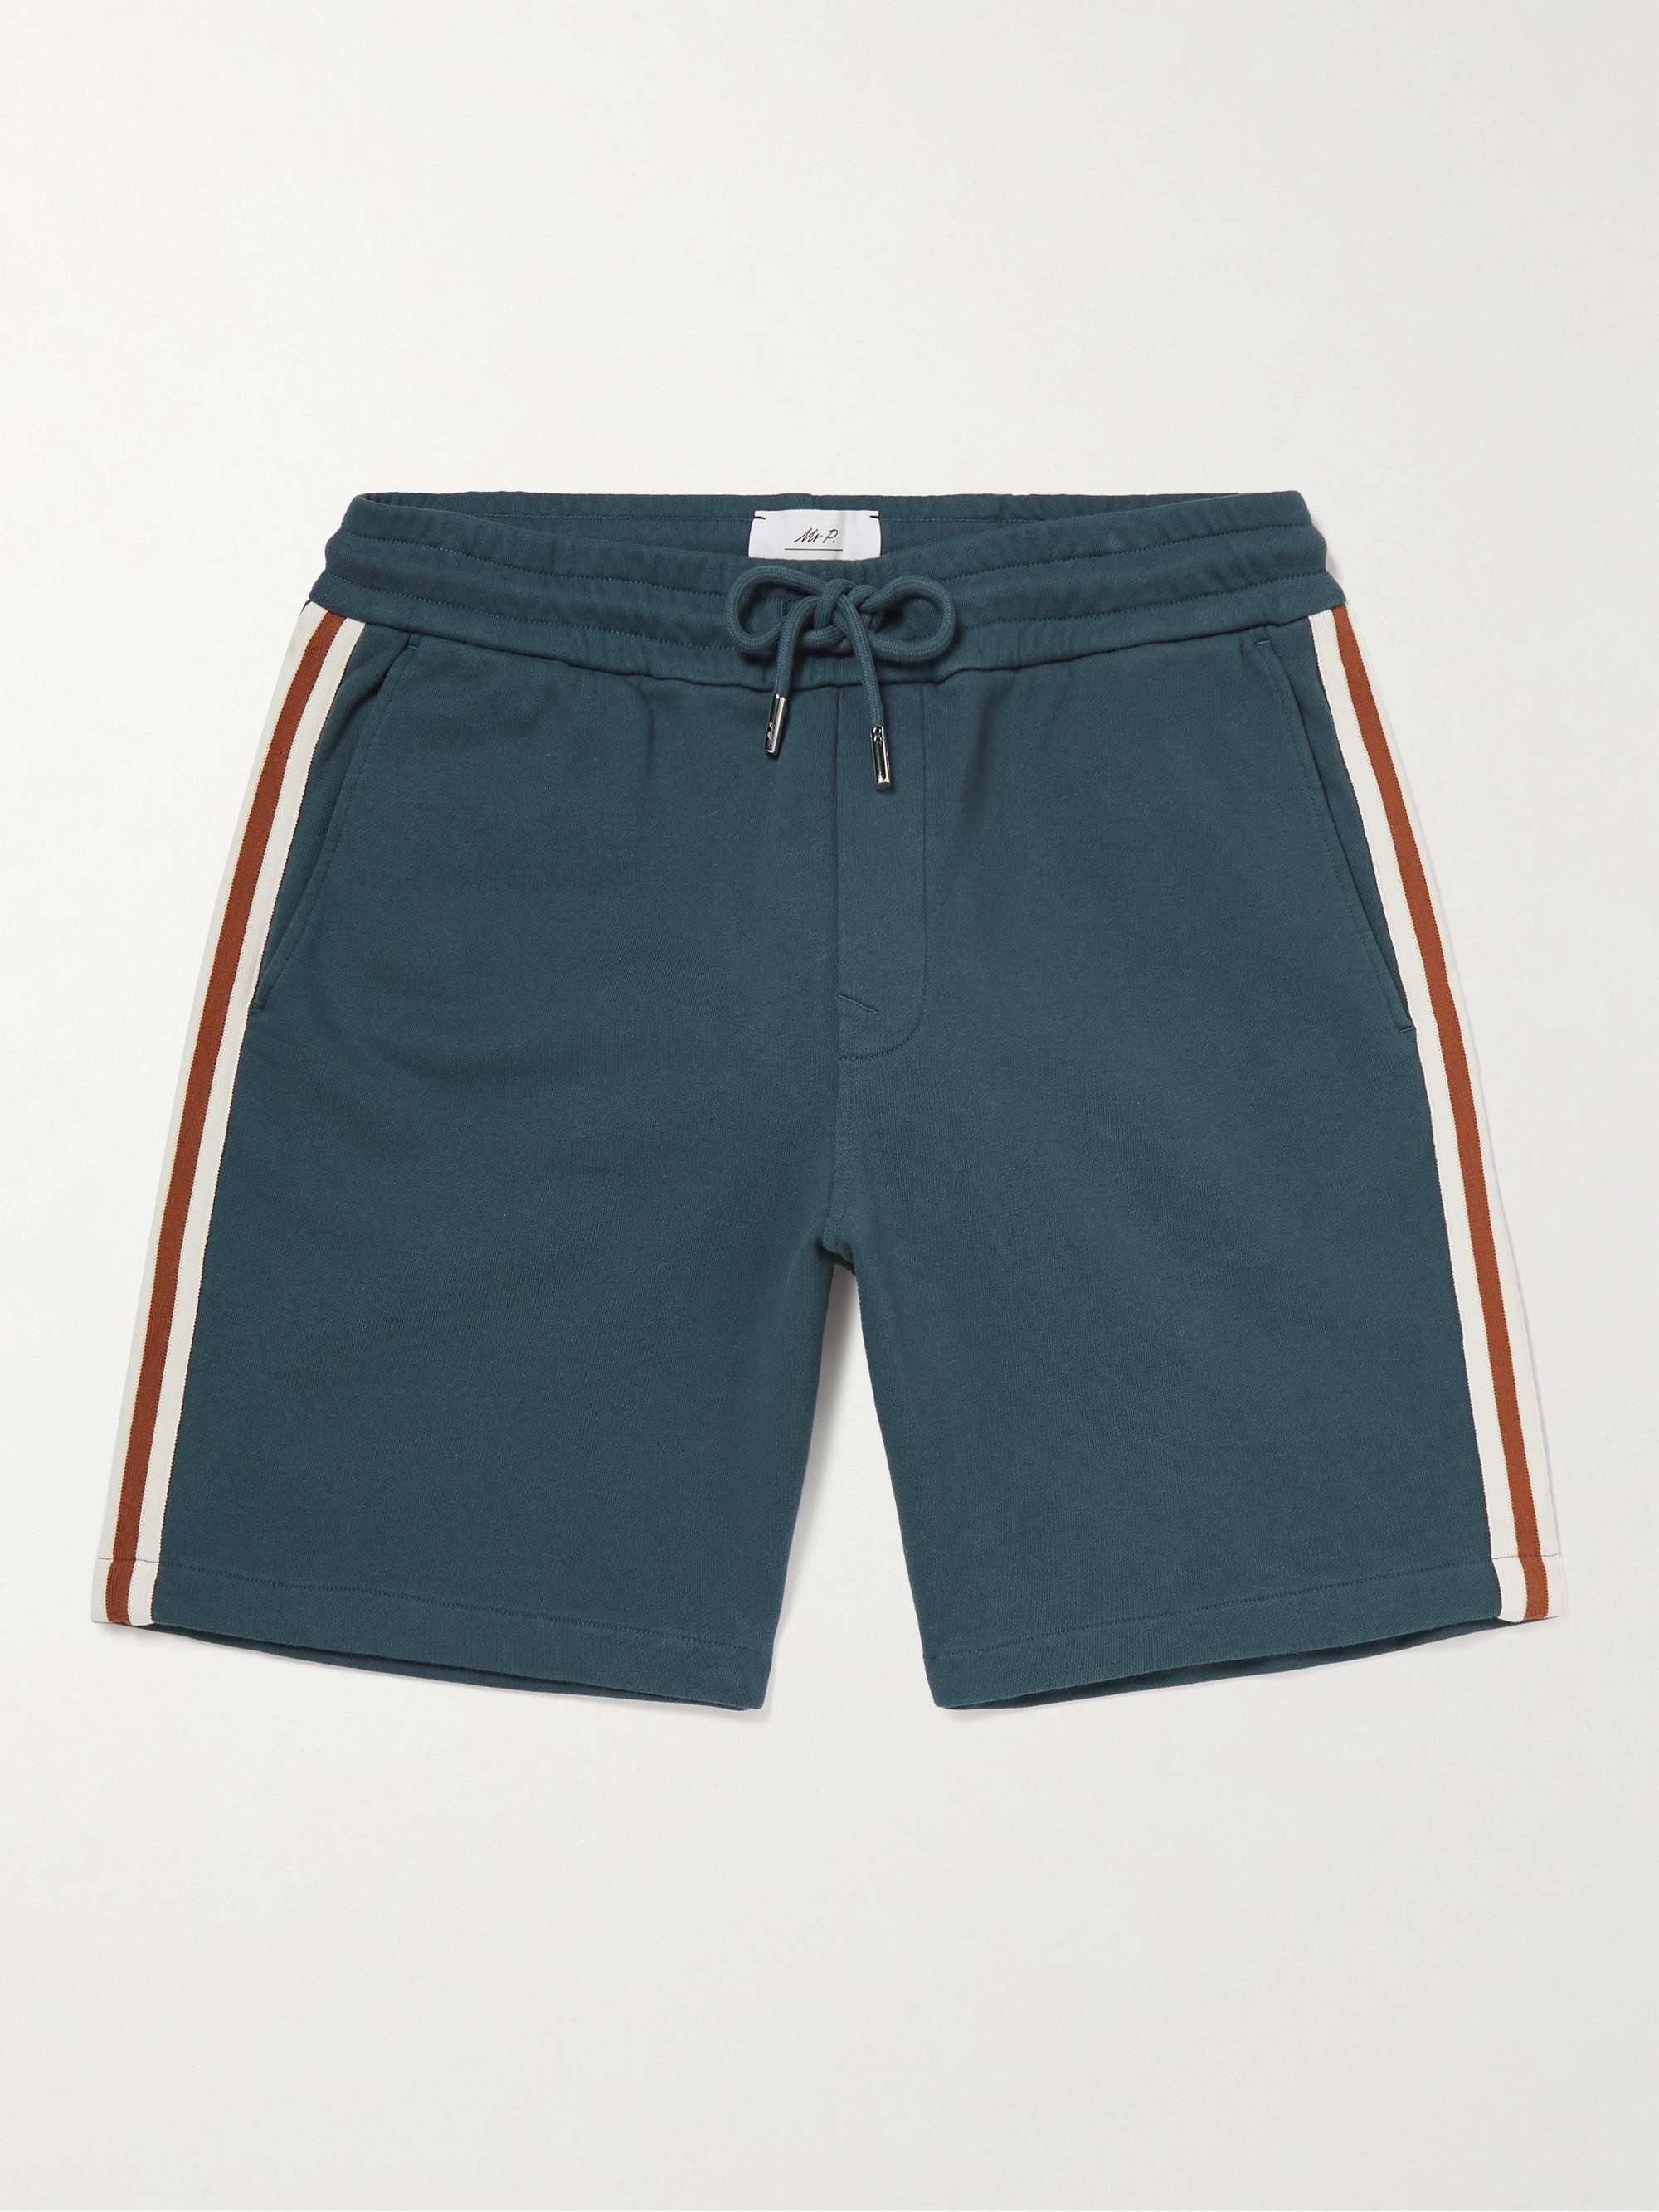 MR P. Striped Organic Cotton-Jersey Drawstring Shorts